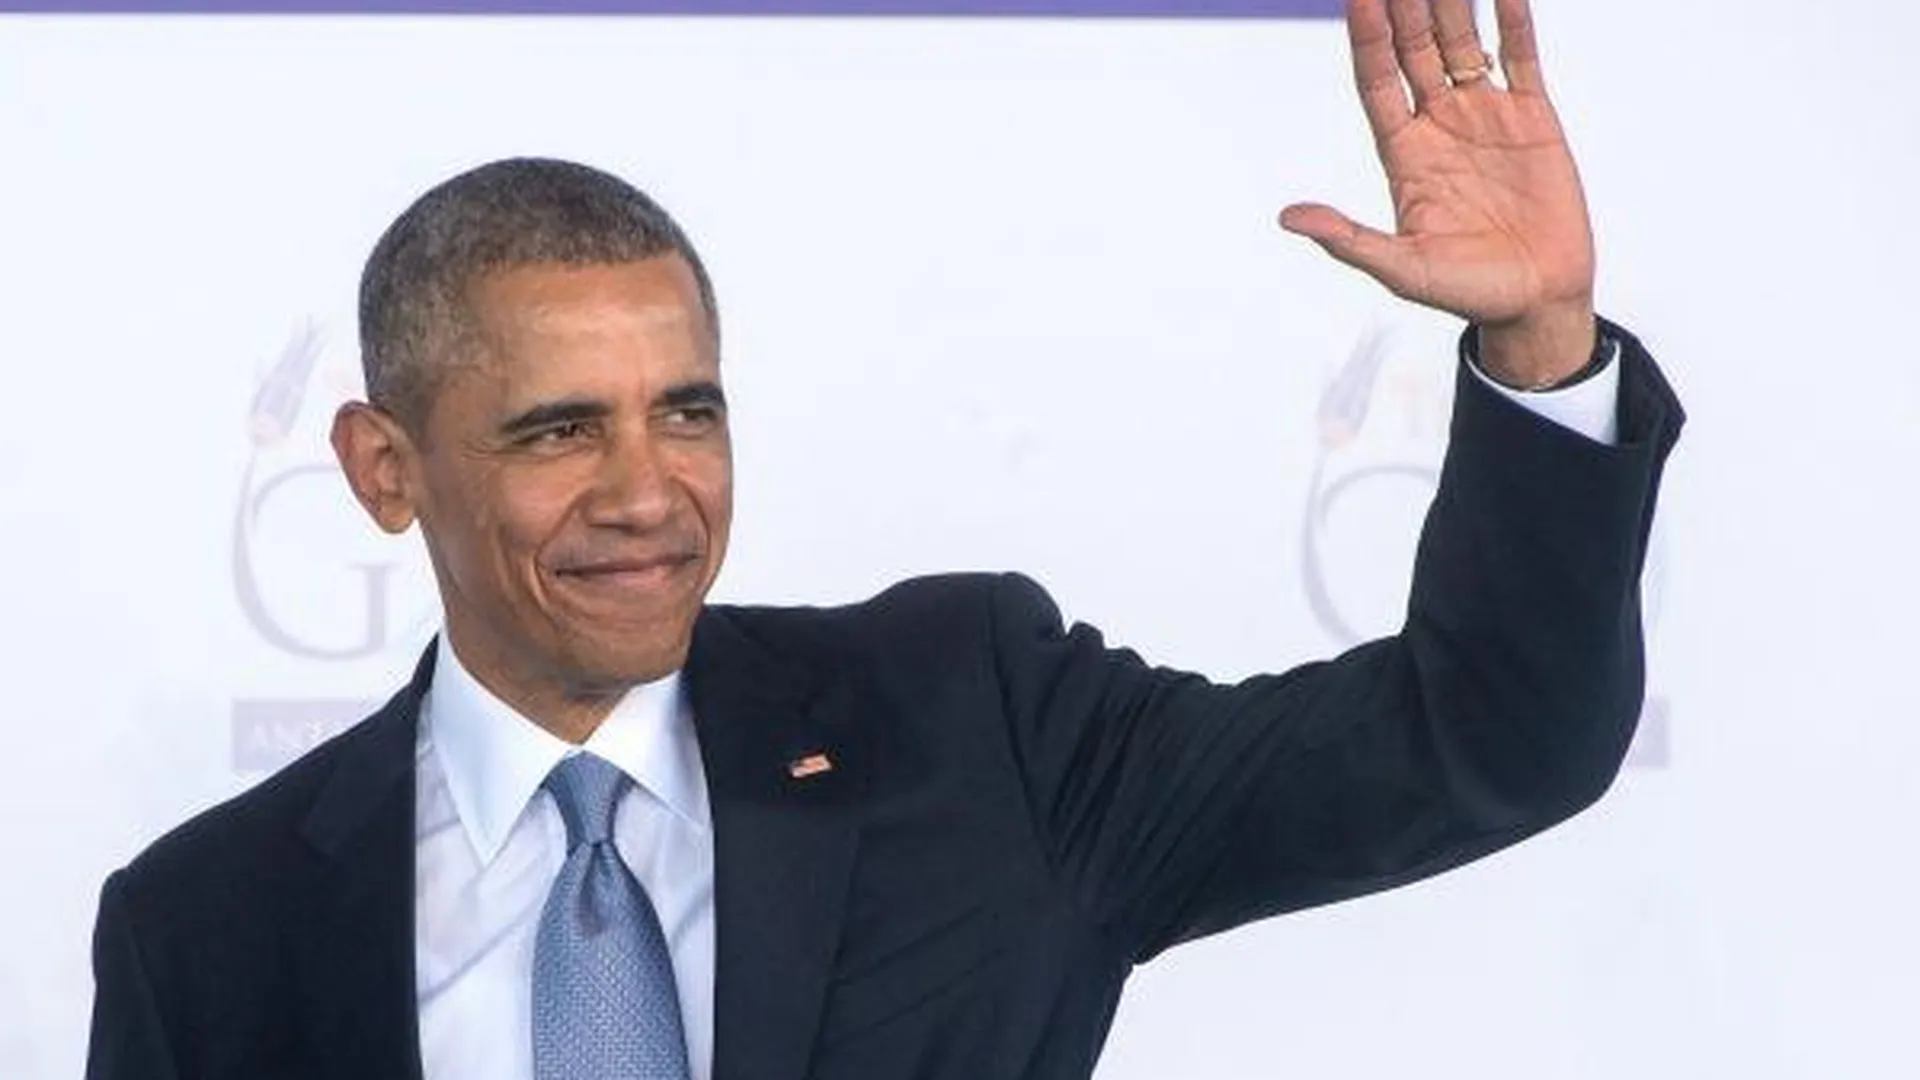 Обама стал первым президентом США, посетившим Хиросиму после бомбардировки 1945 года